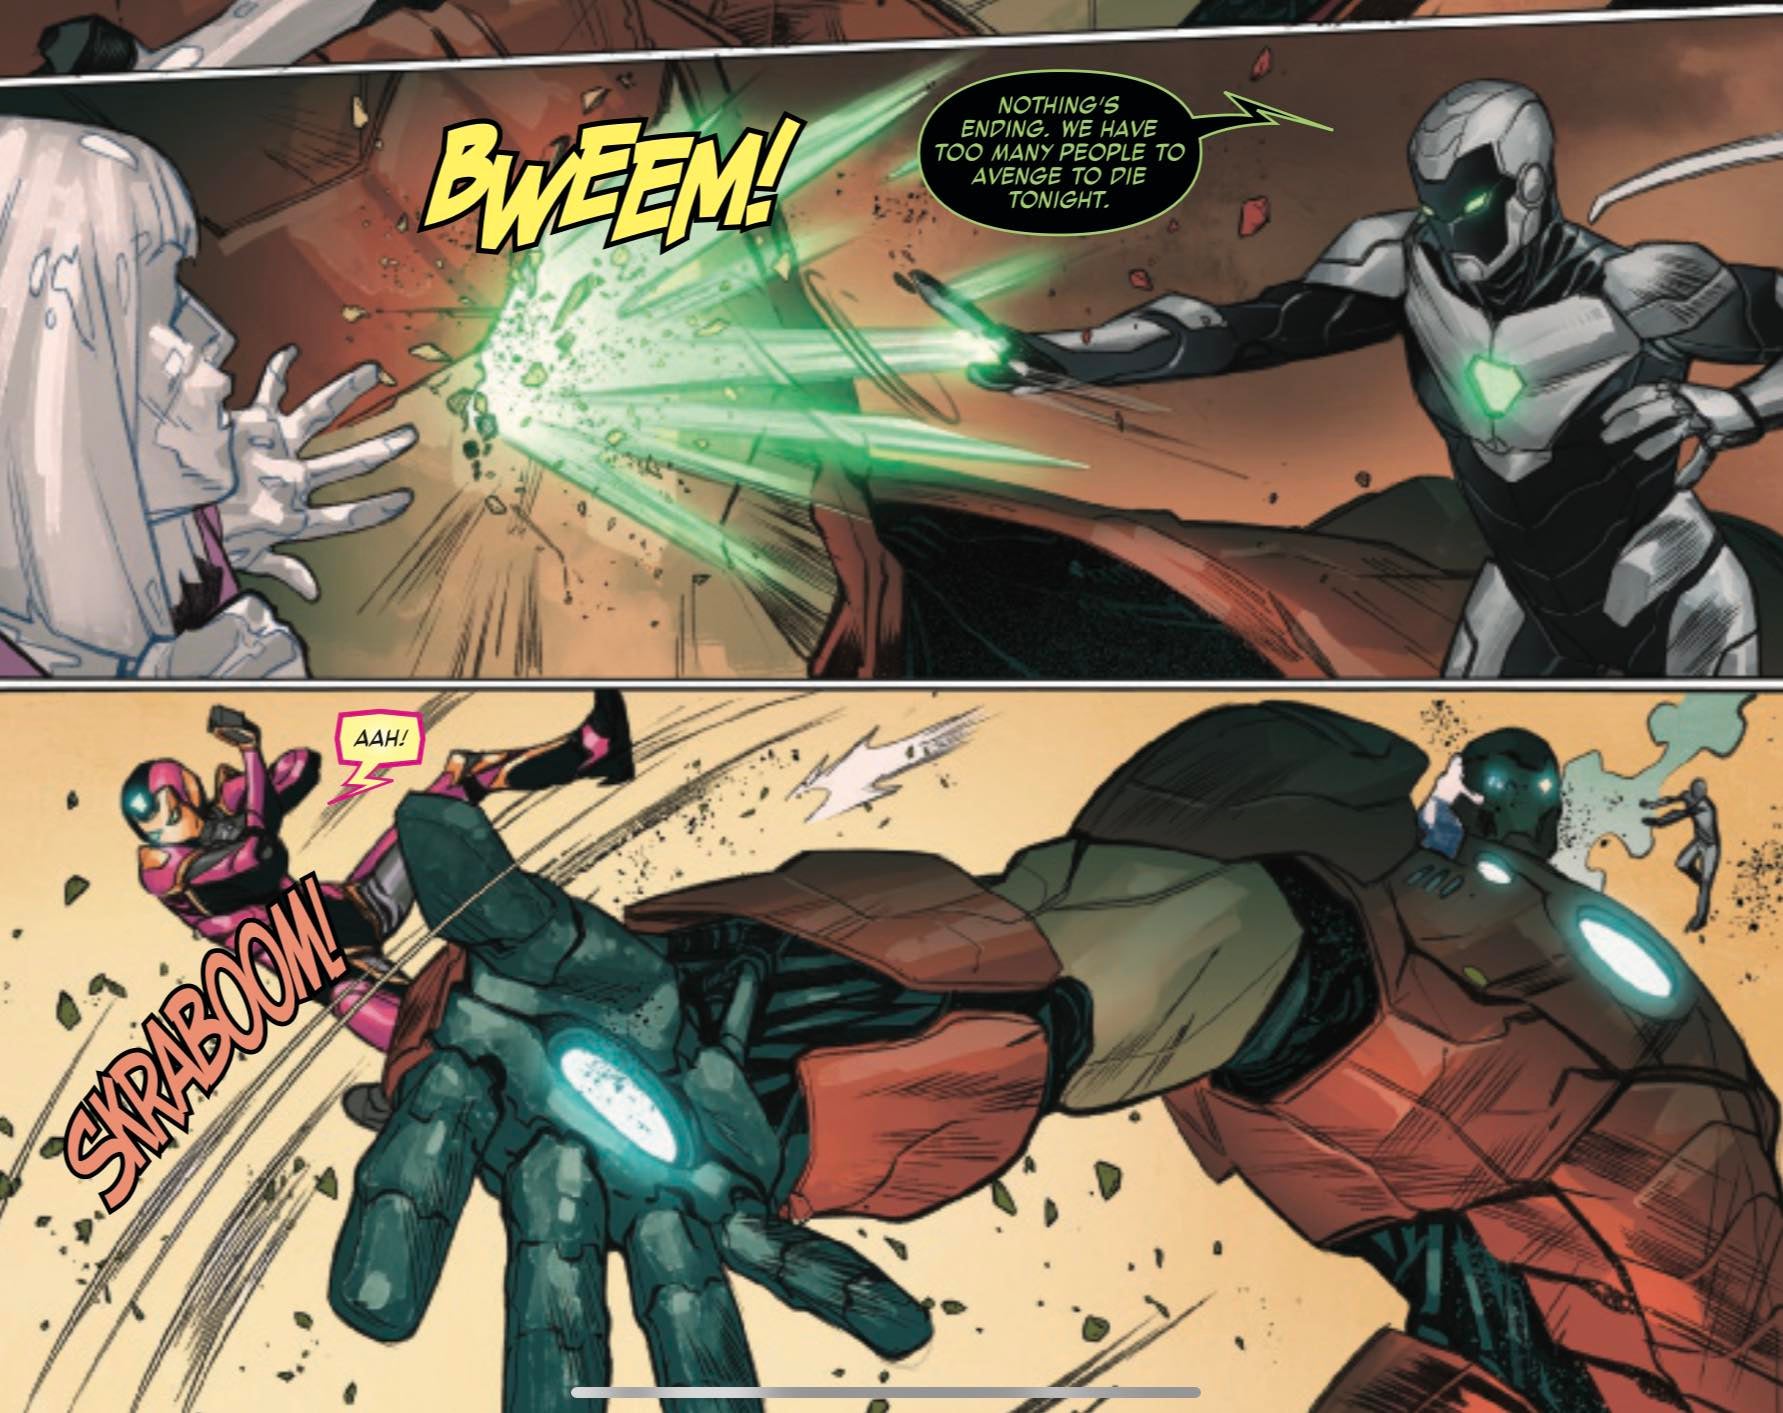 Iron Man and Ironheart fight a Stark Sentinel